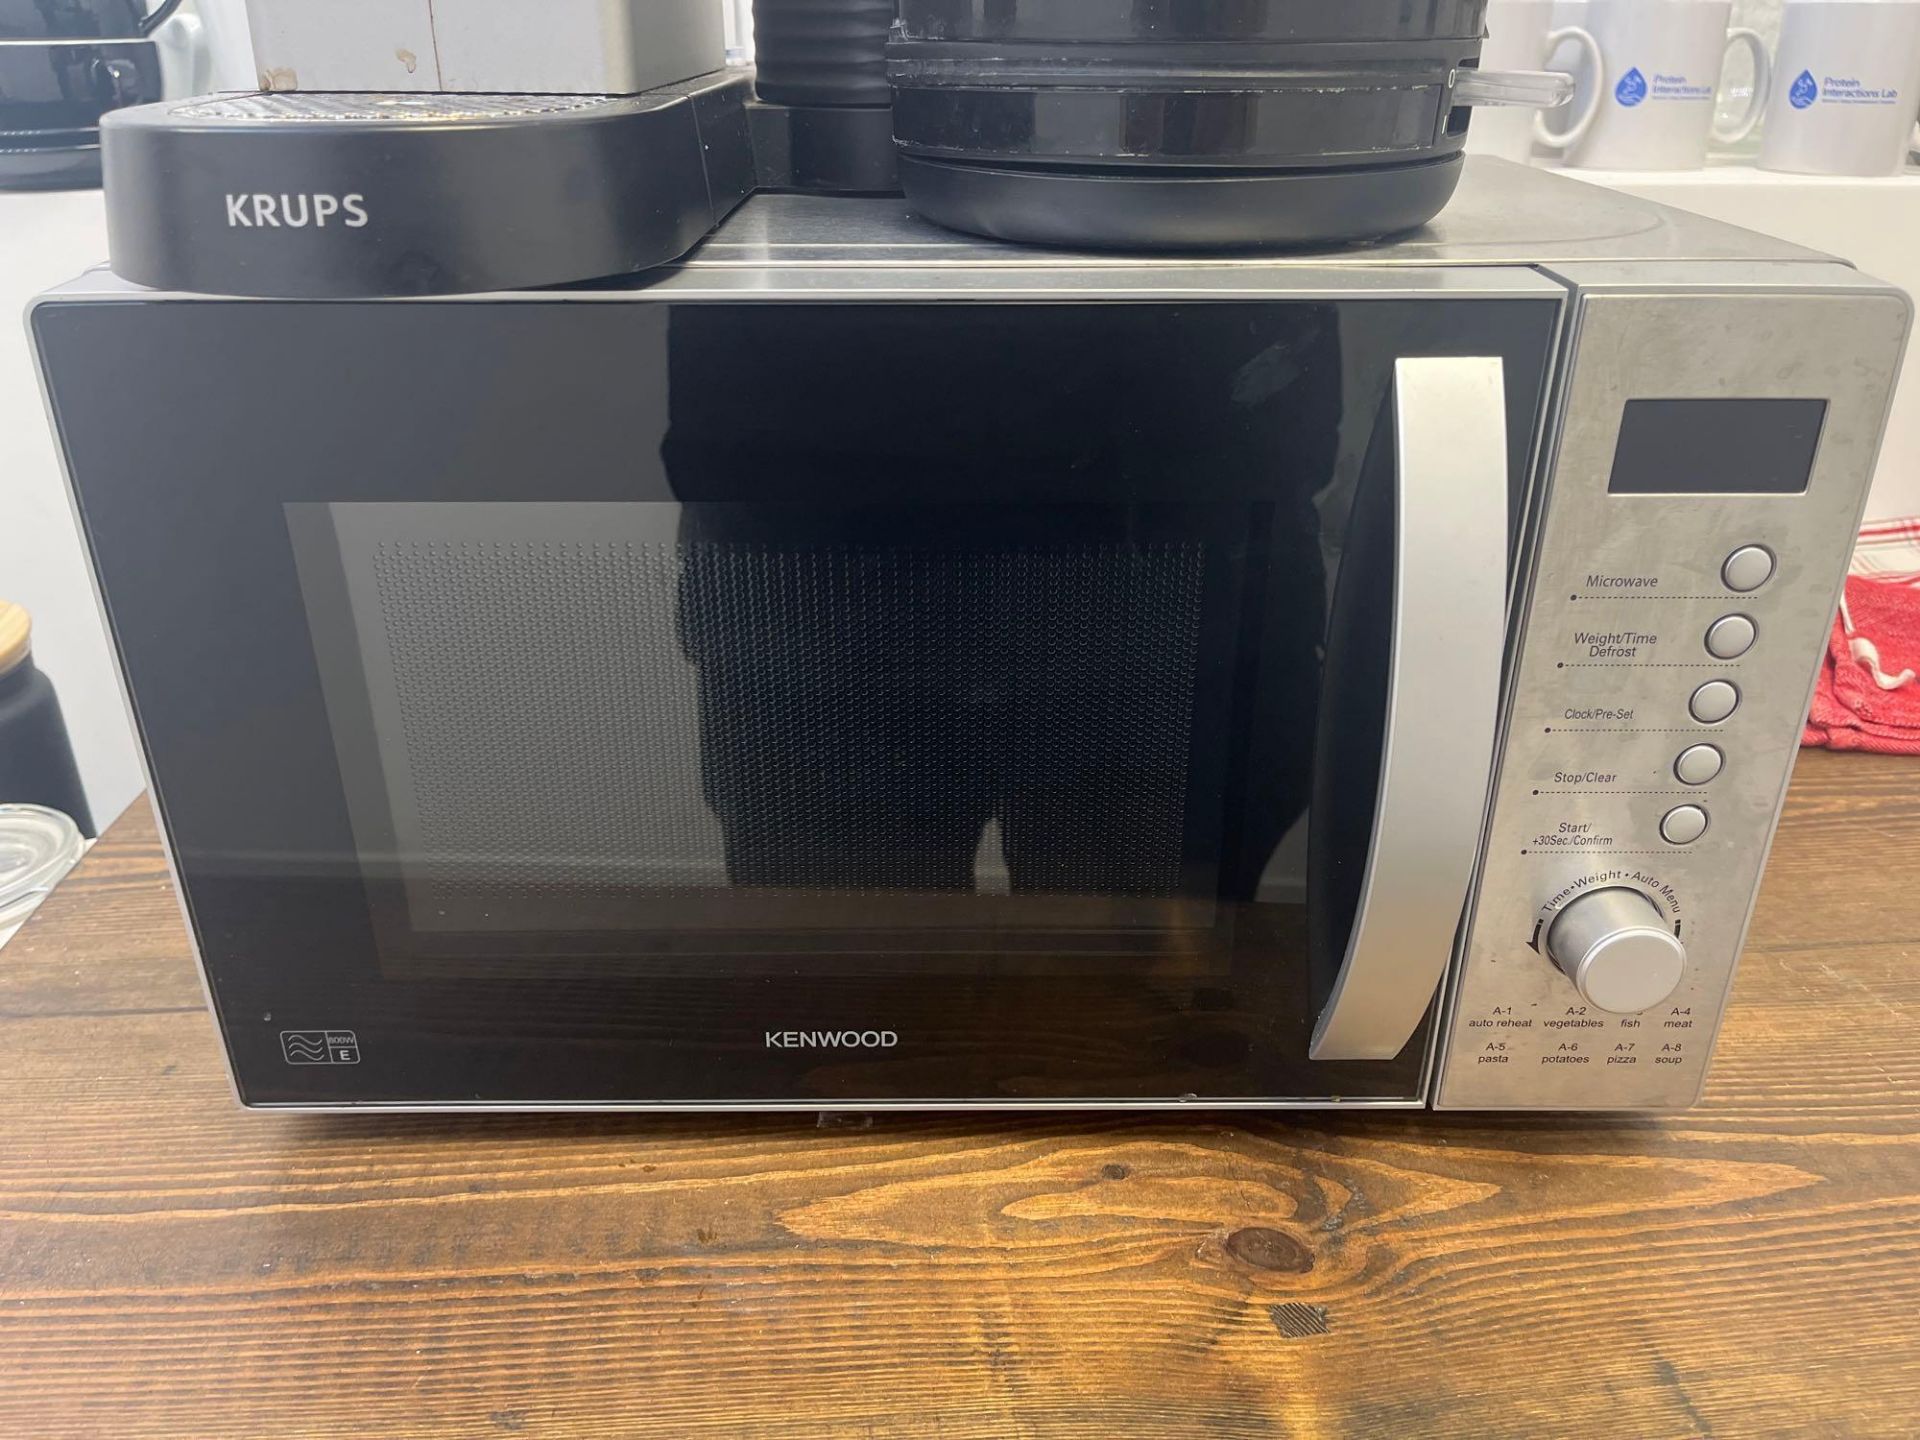 Kenwood domestic microwave, Krups coffee machine with Logik kettle - Image 2 of 5